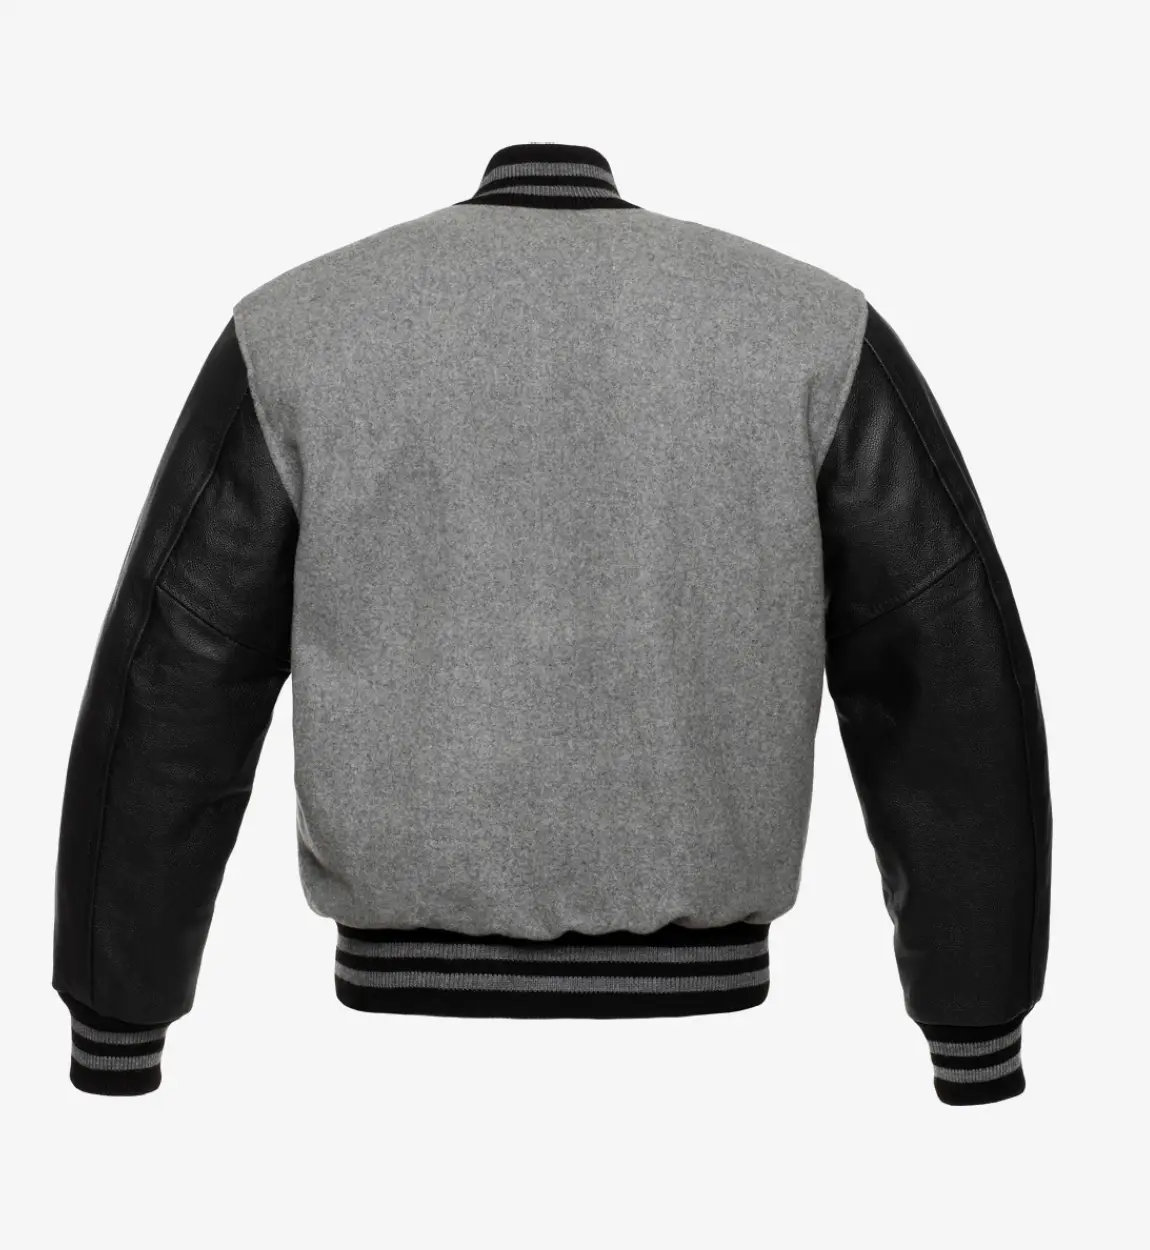 Tendon Sports Varsity Jacket grey wool and black leather